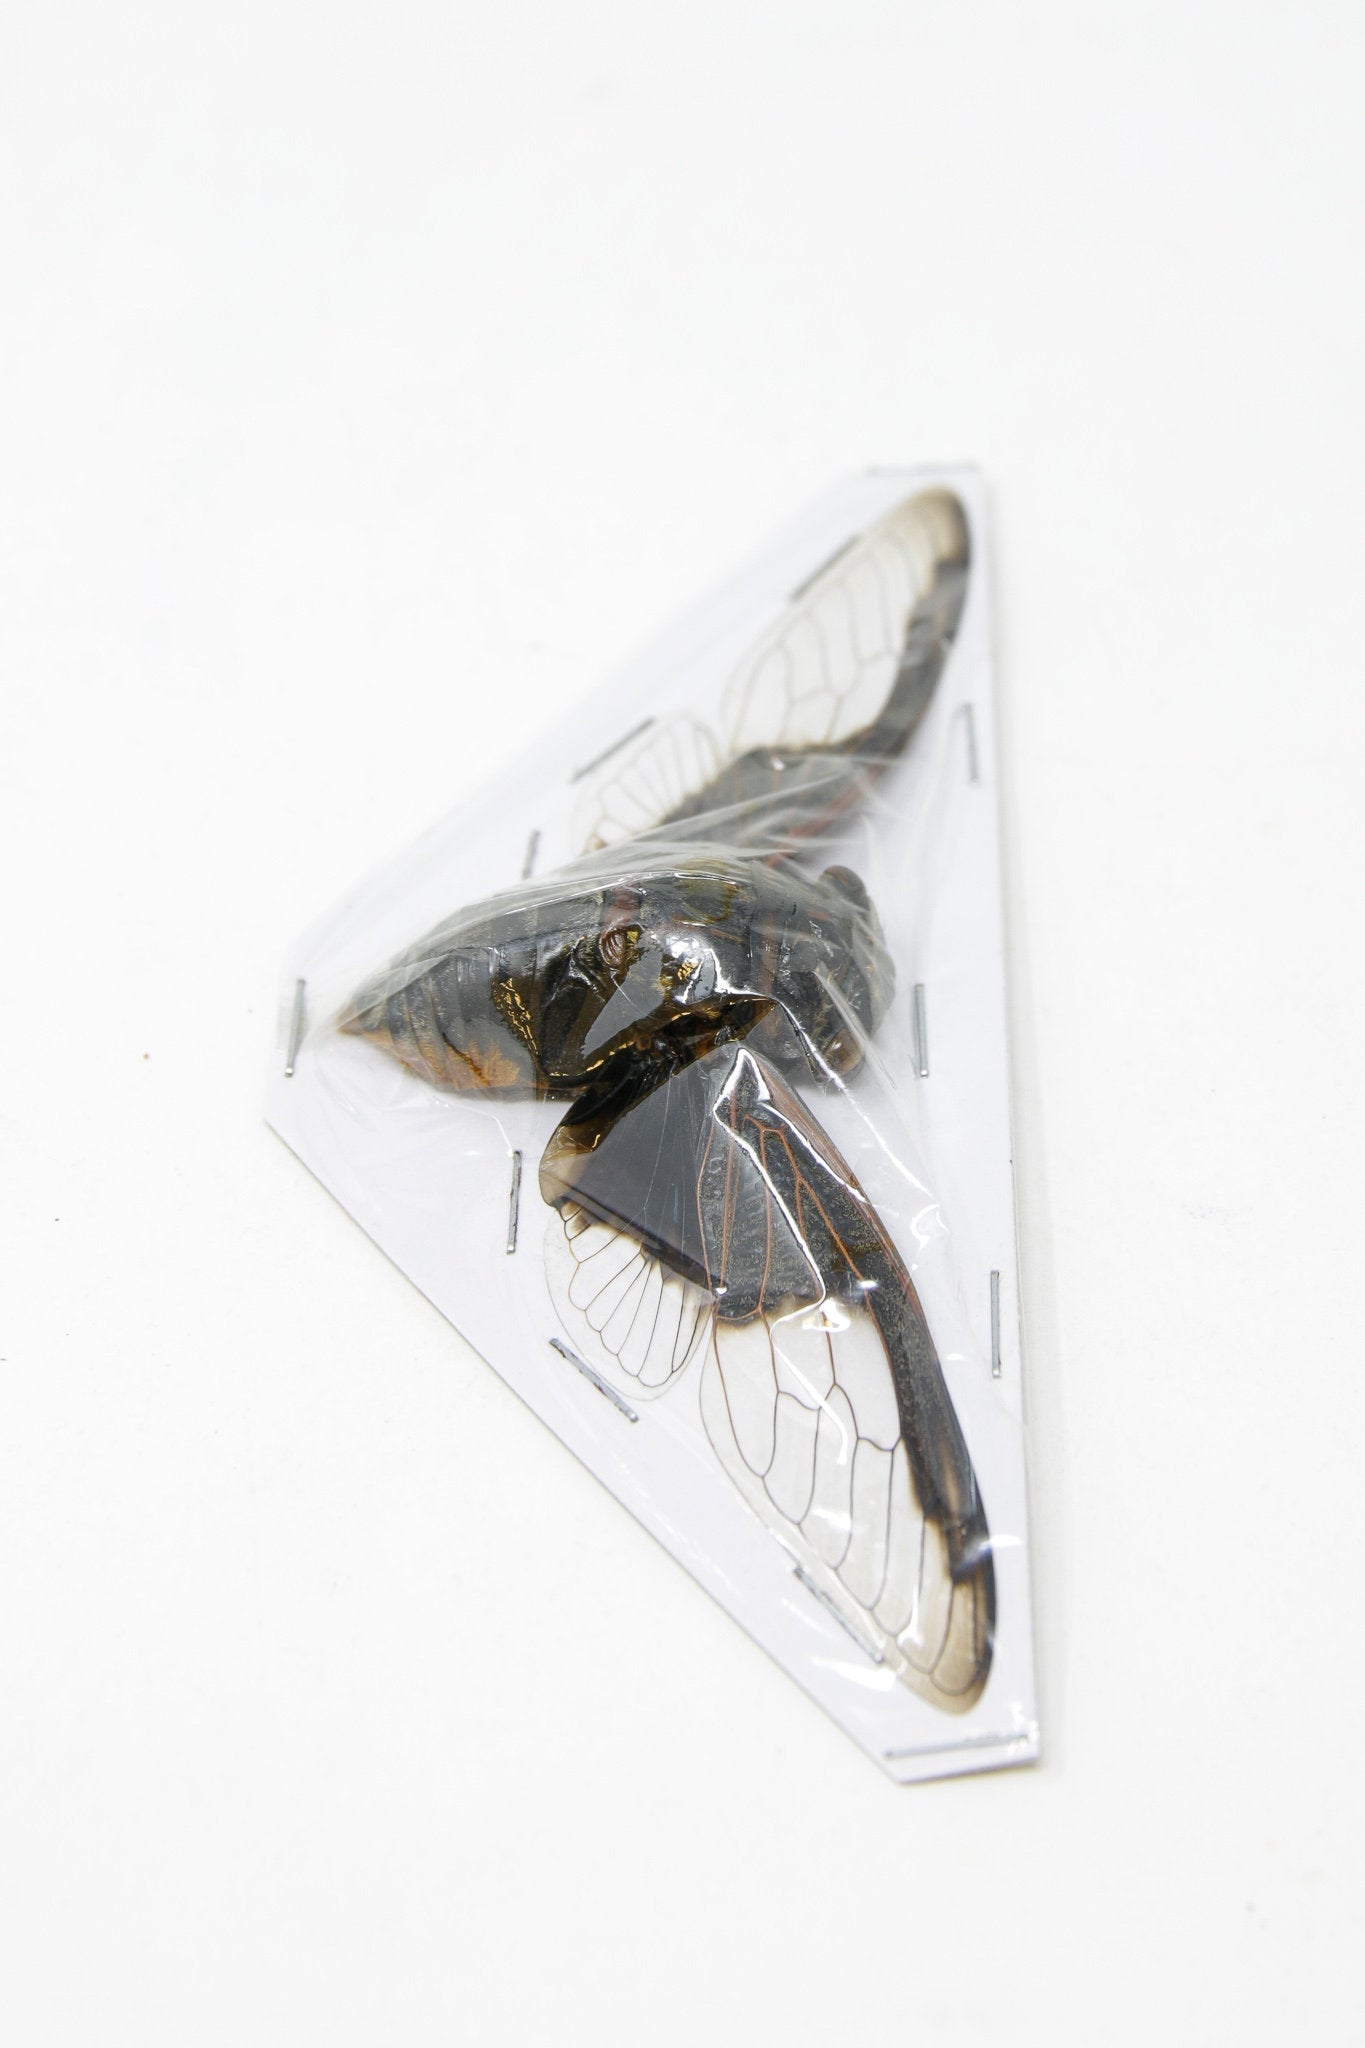 WHOLESALE Bat-wing Cicadas (Cryptotympana aquila) A1 Wings Spread 100mm